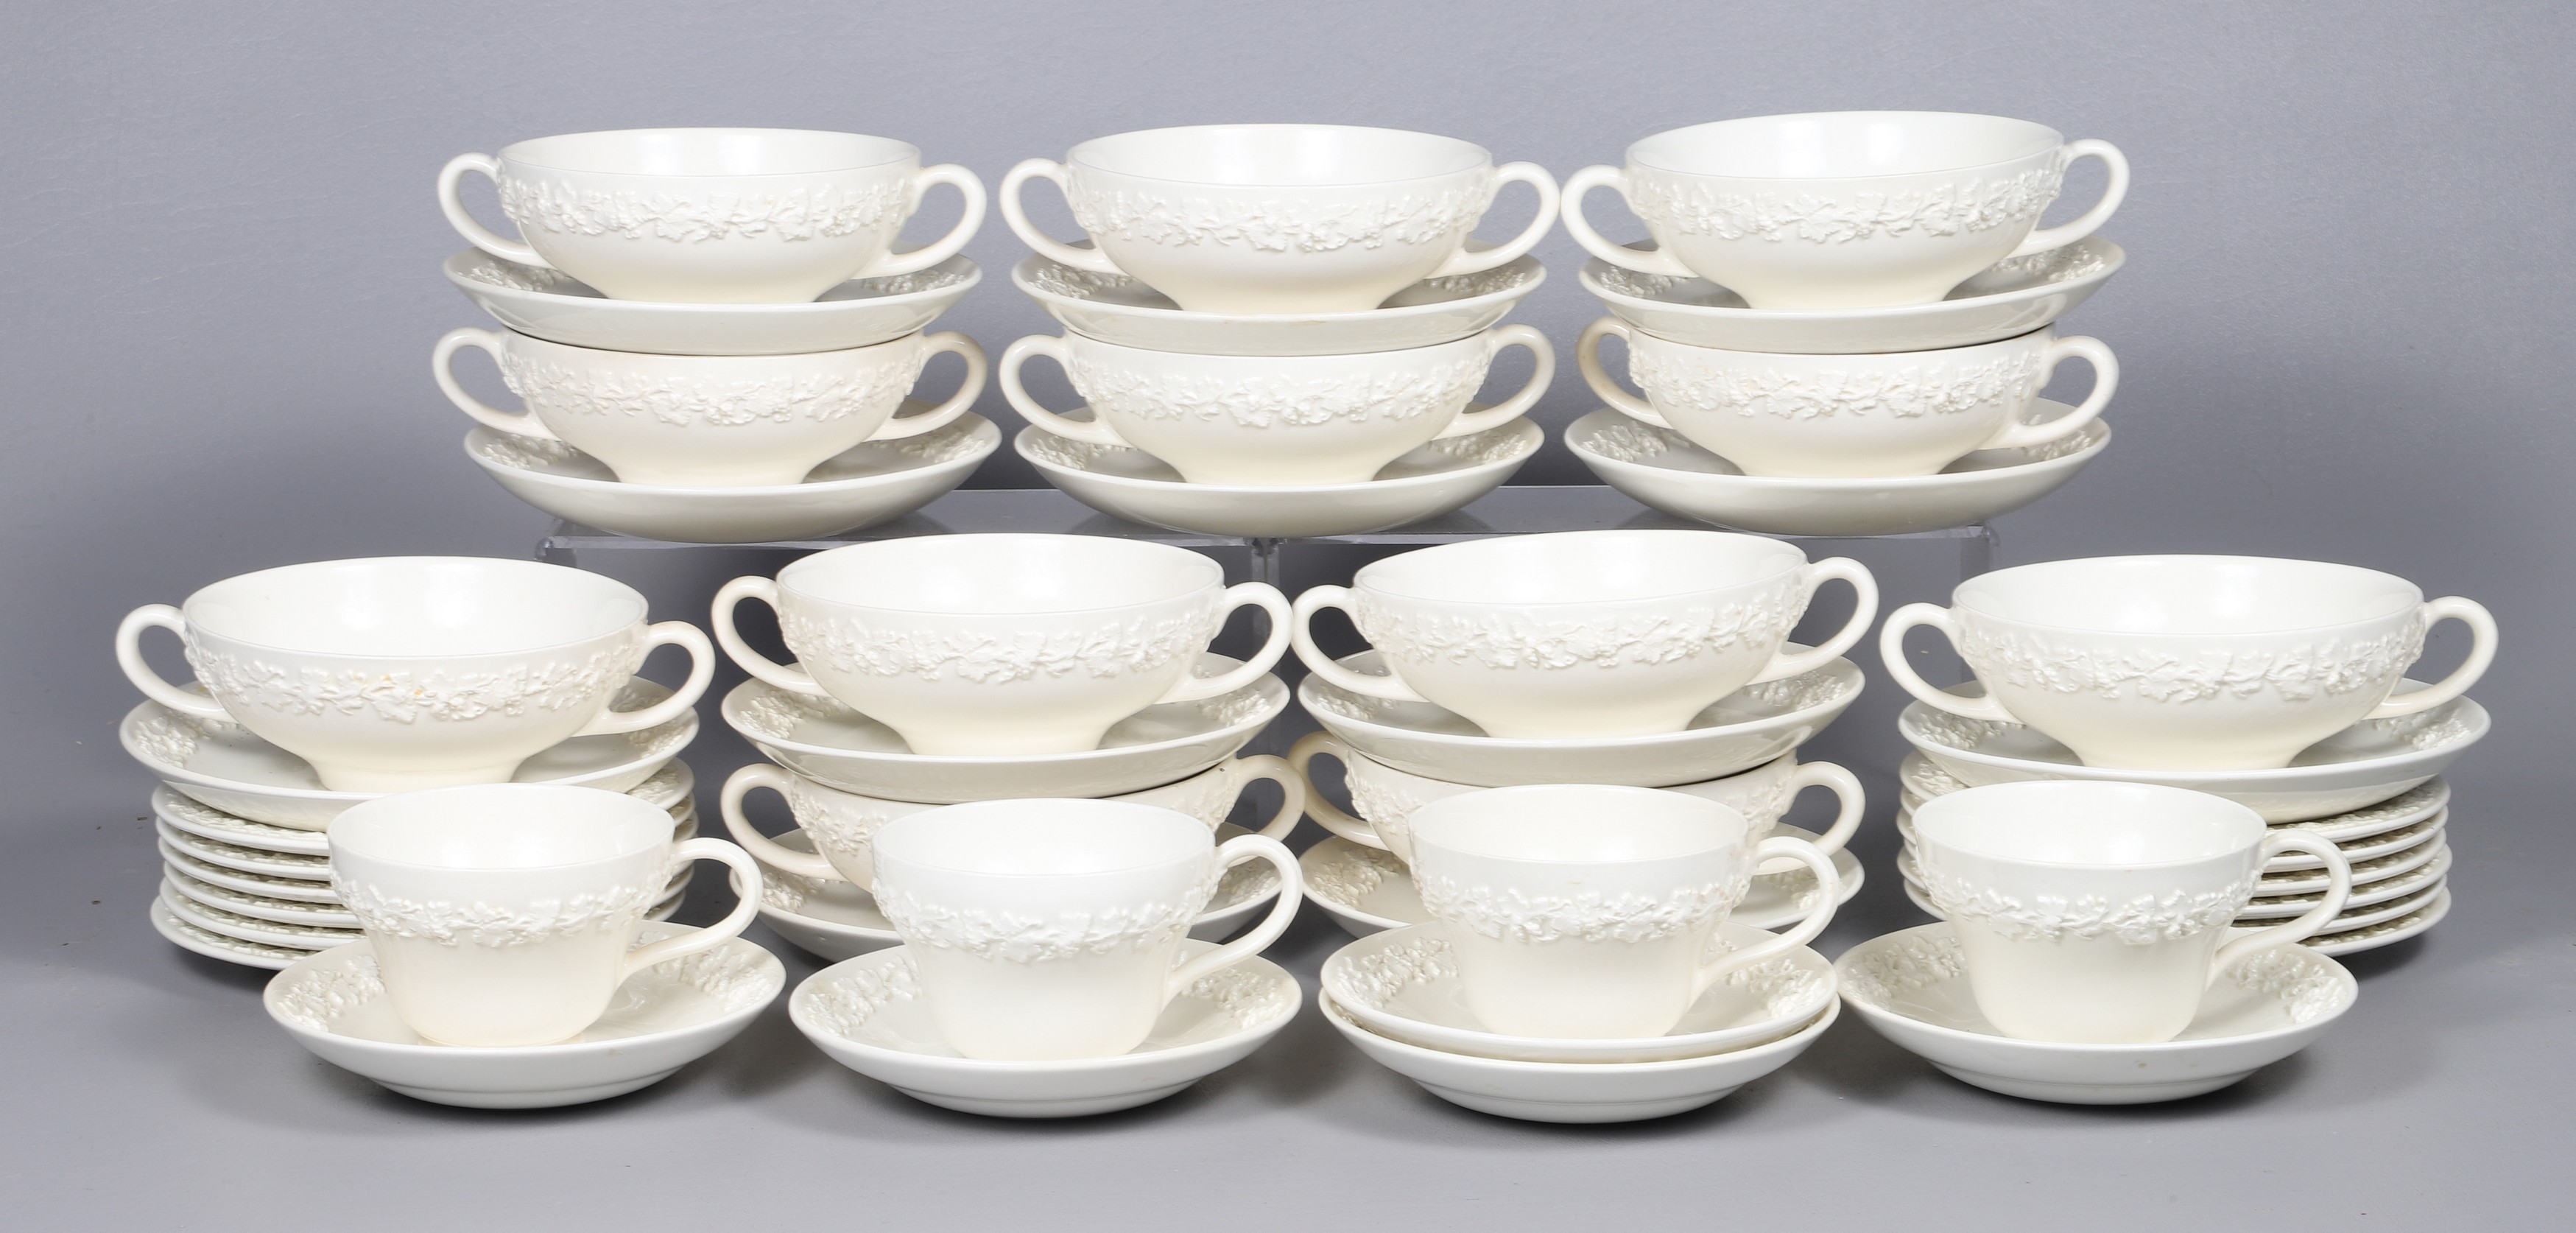  45 Pcs Wedgwood porcelain dinnerware  2e133c